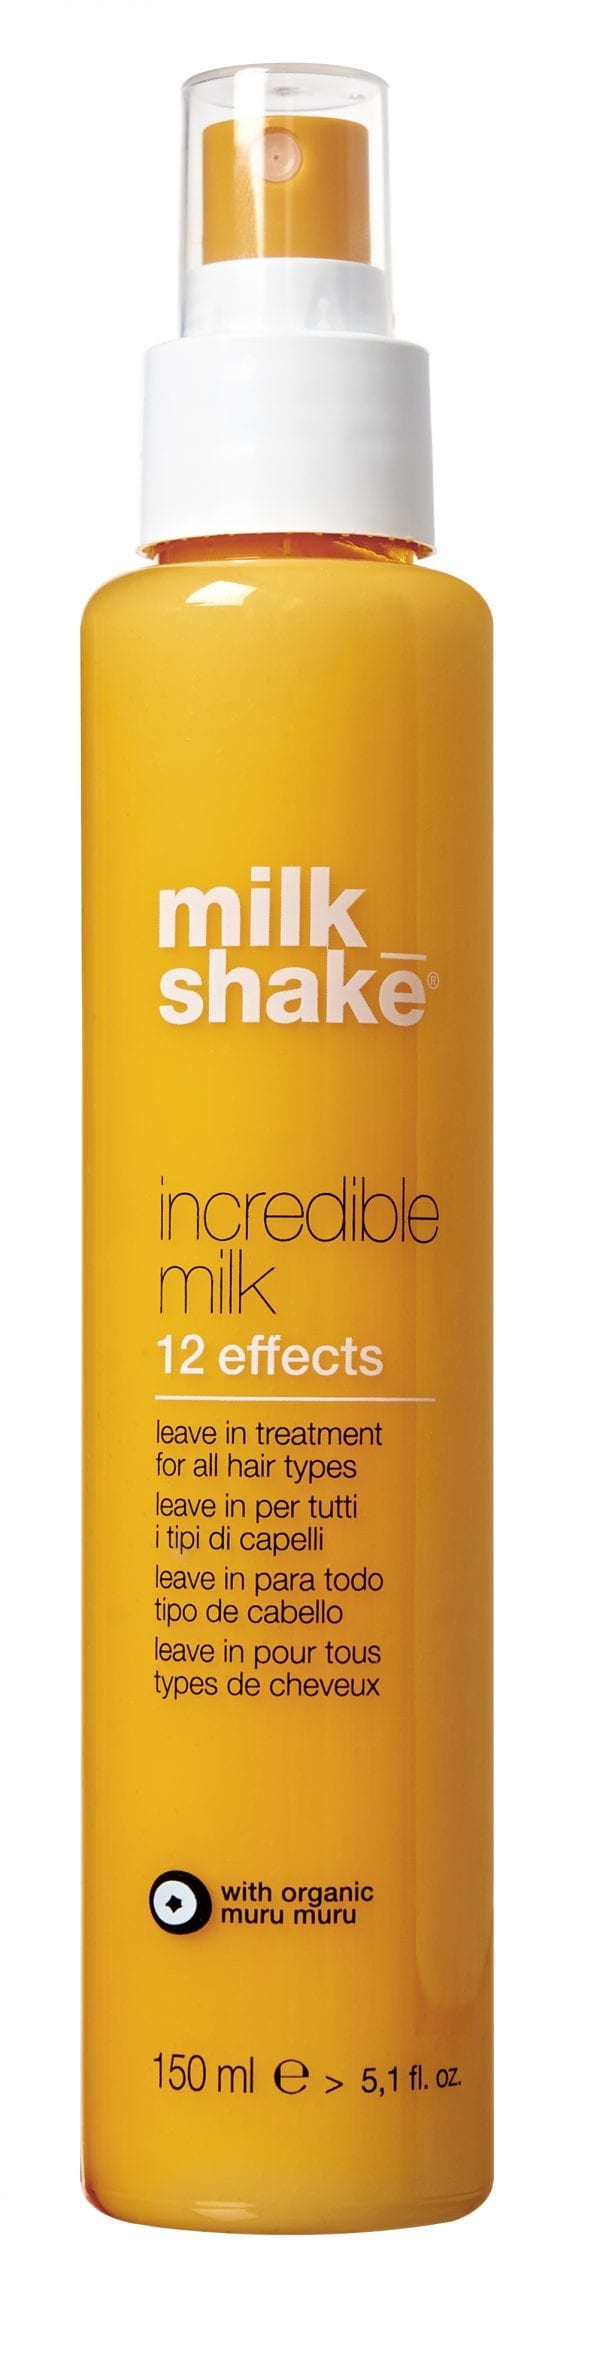 milk_shake #hair proucts have it & love it:) | Milkshake hair products,  Beauty, Diy hairstyles